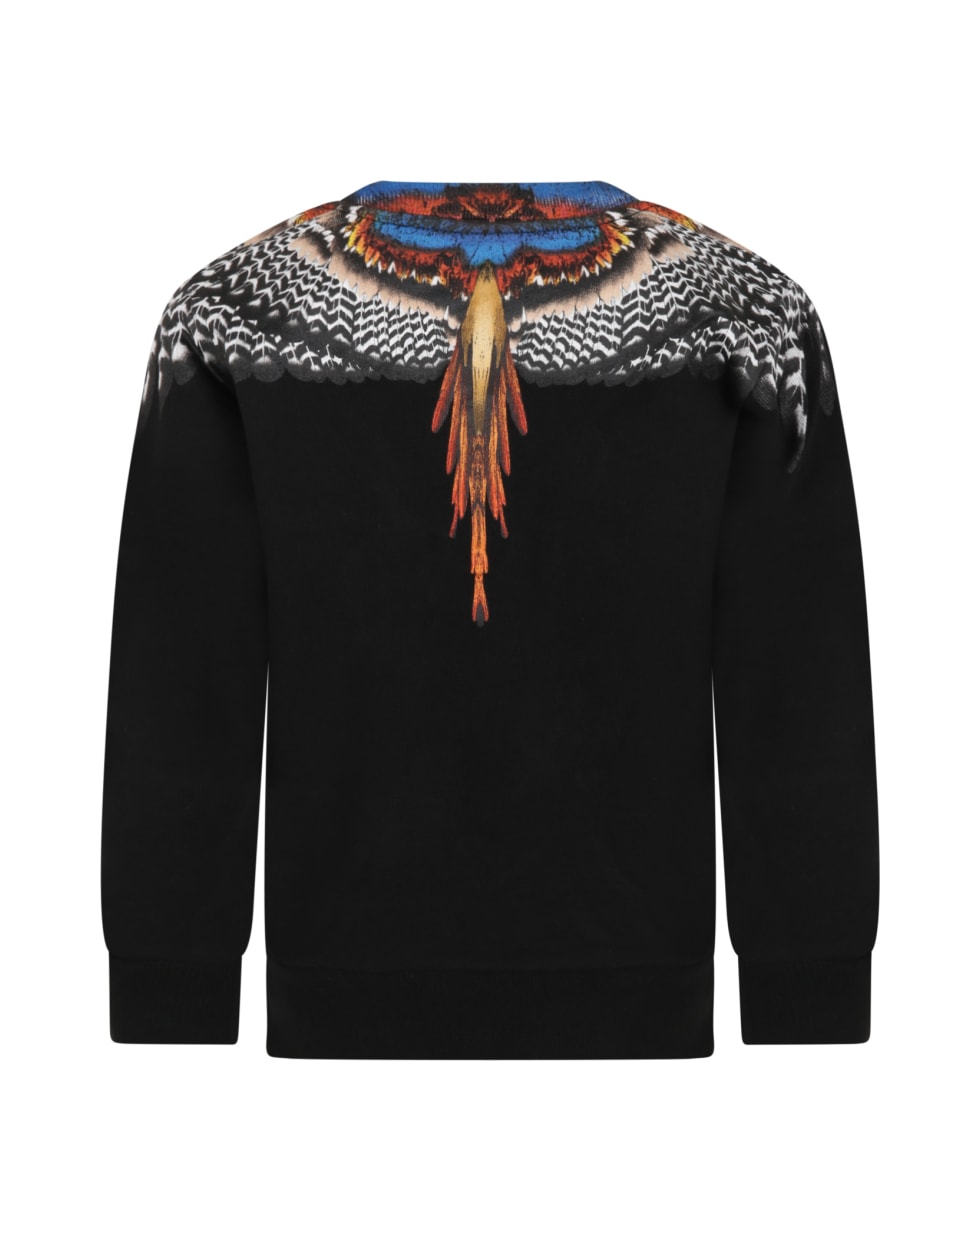 Marcelo Burlon Black Sweatshirt For Boy With Iconic Wings - Nero e Arancione